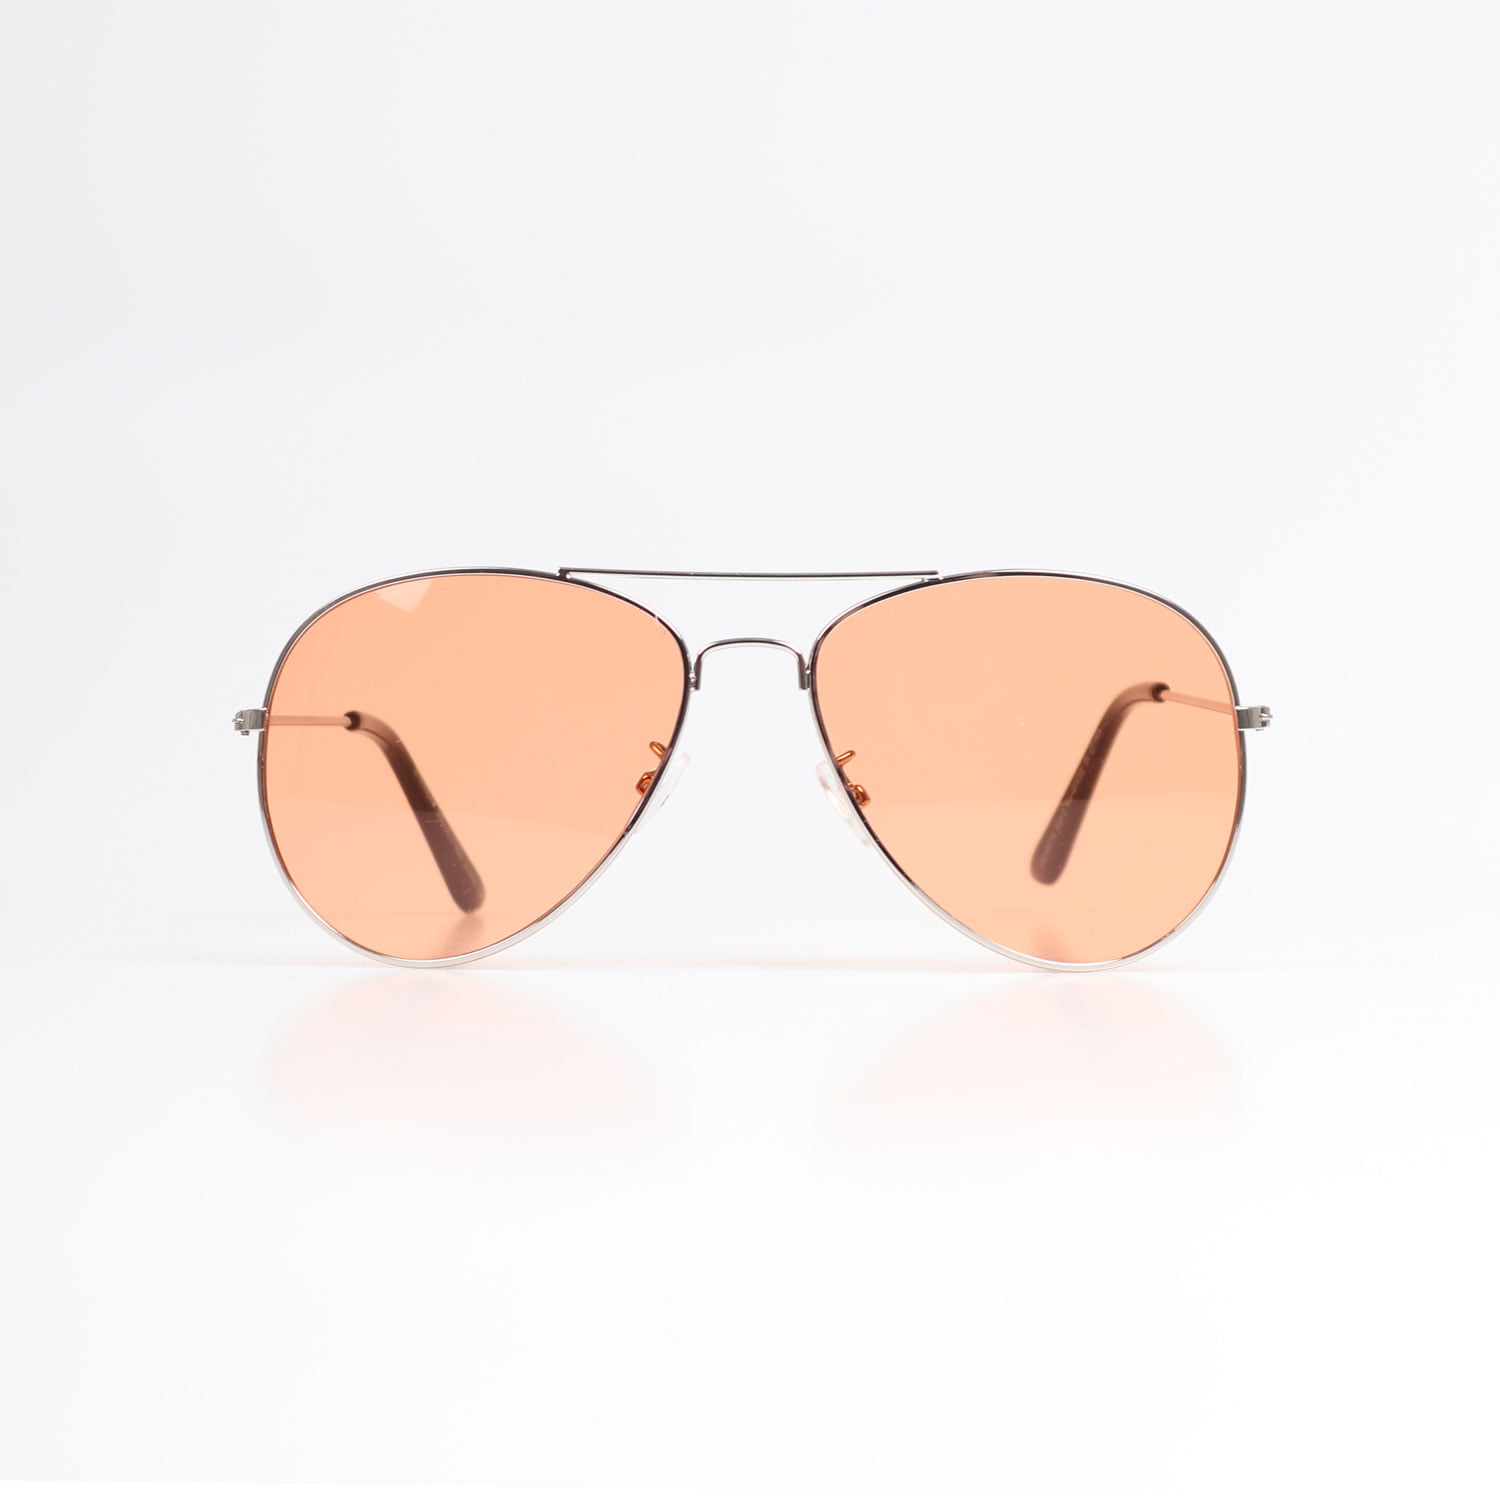 Masterpiece Aviator Sunglasses - Orange Lenses/Silver